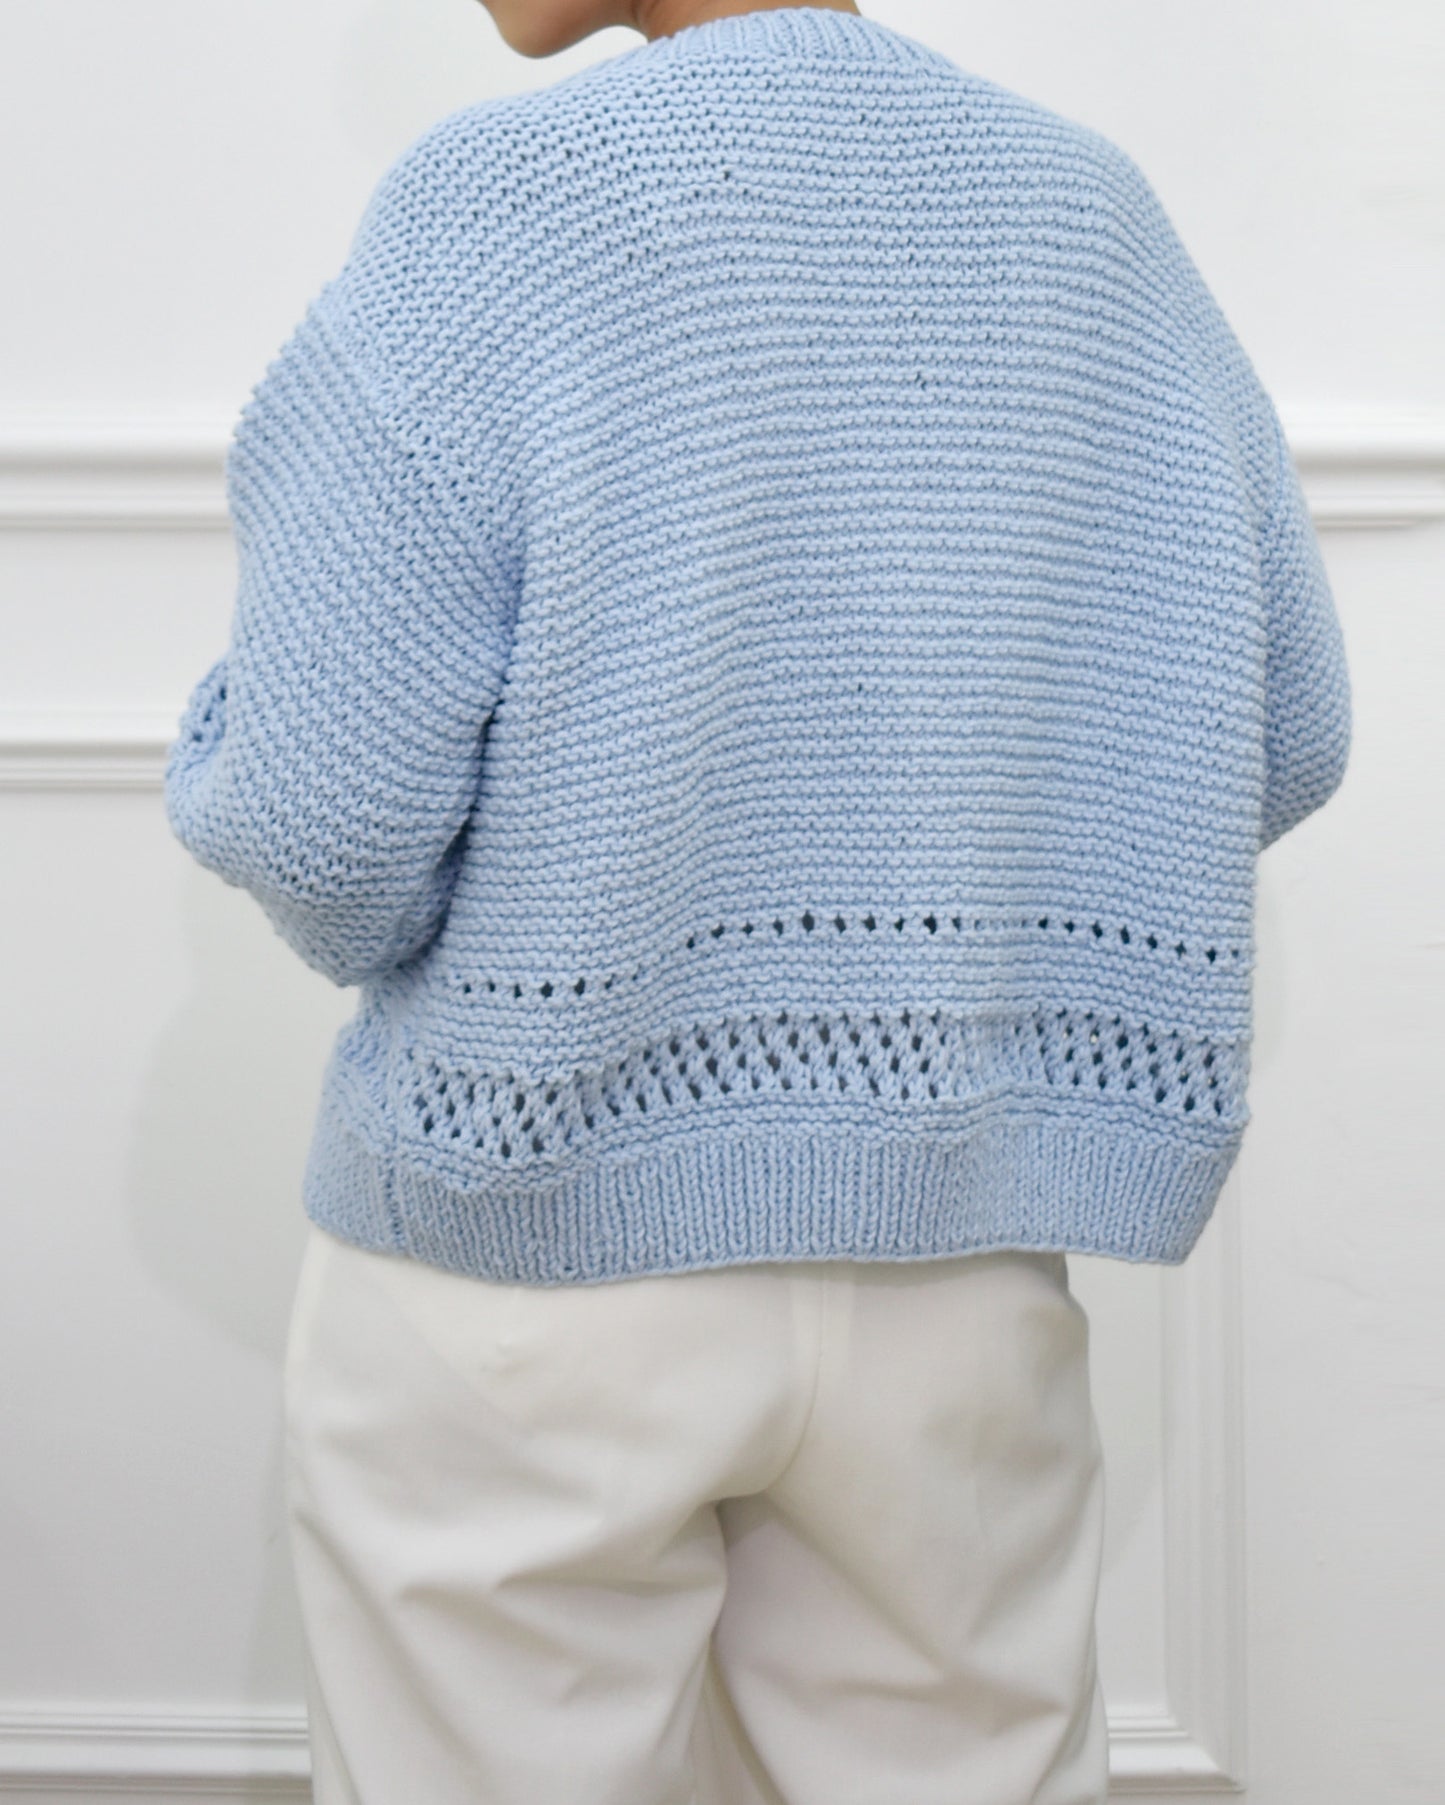 Cardigan No.14 | Easy knitting pattern